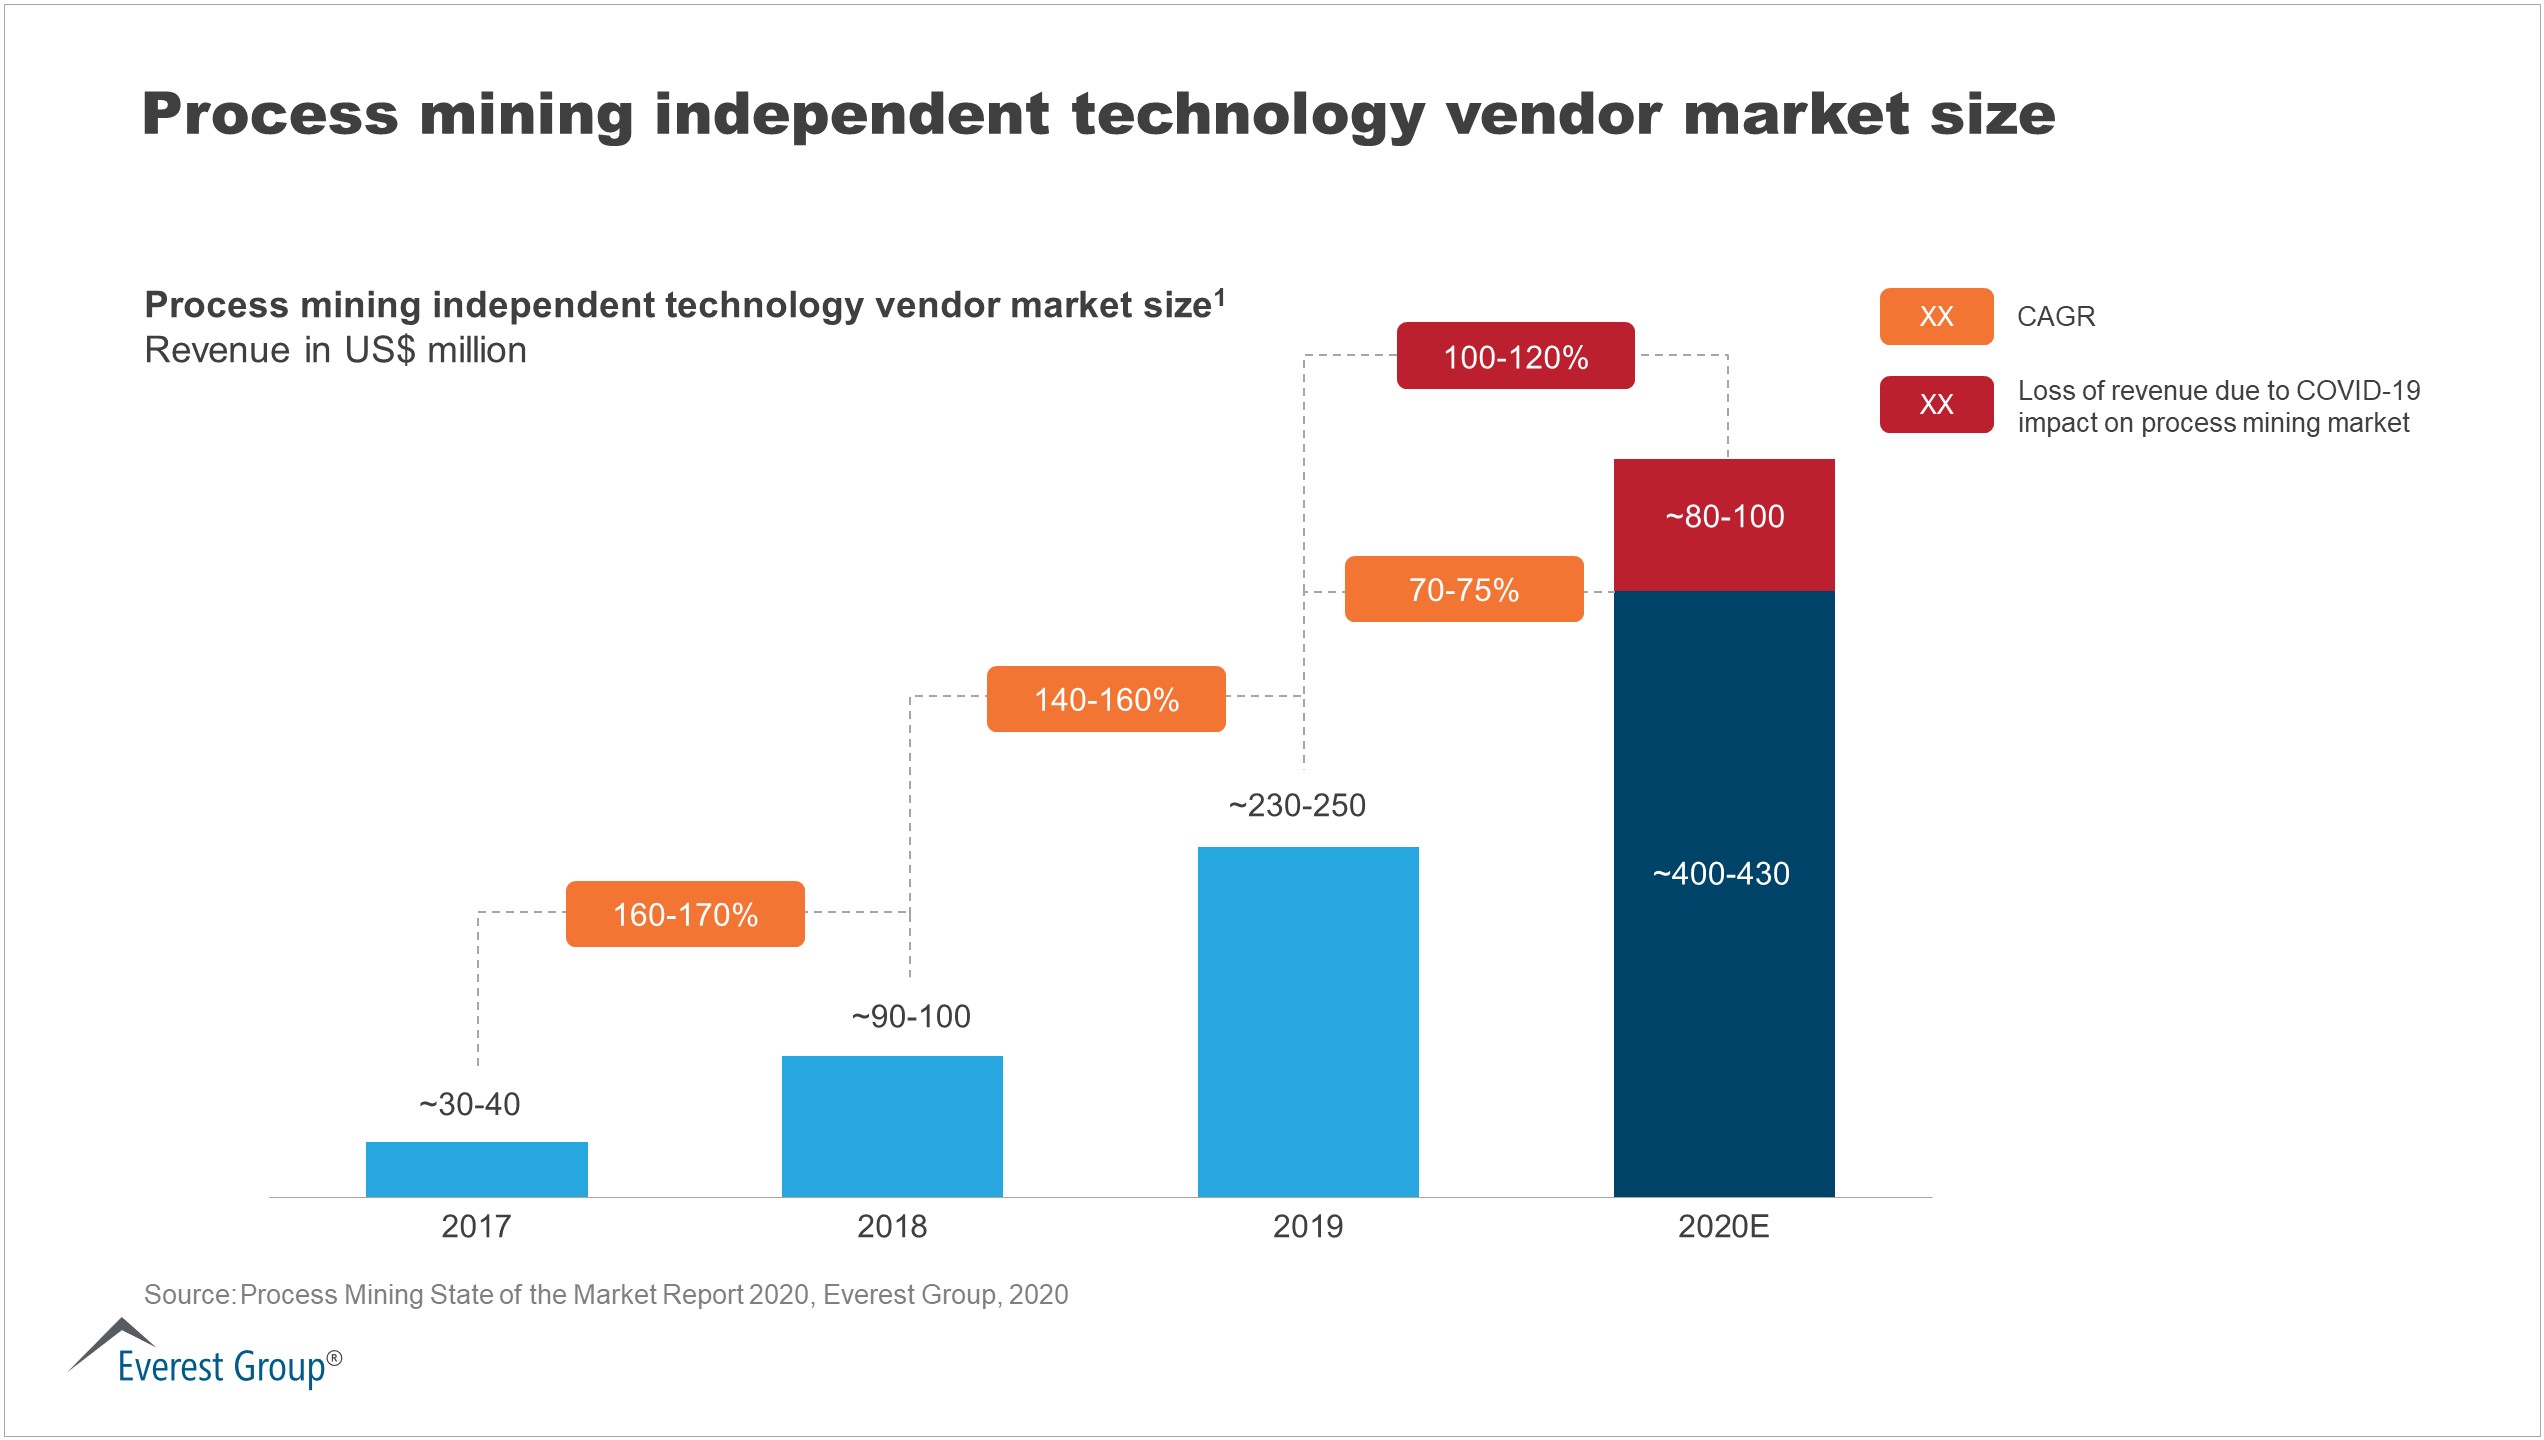 Process mining independent technology vendor market size — Everest Group